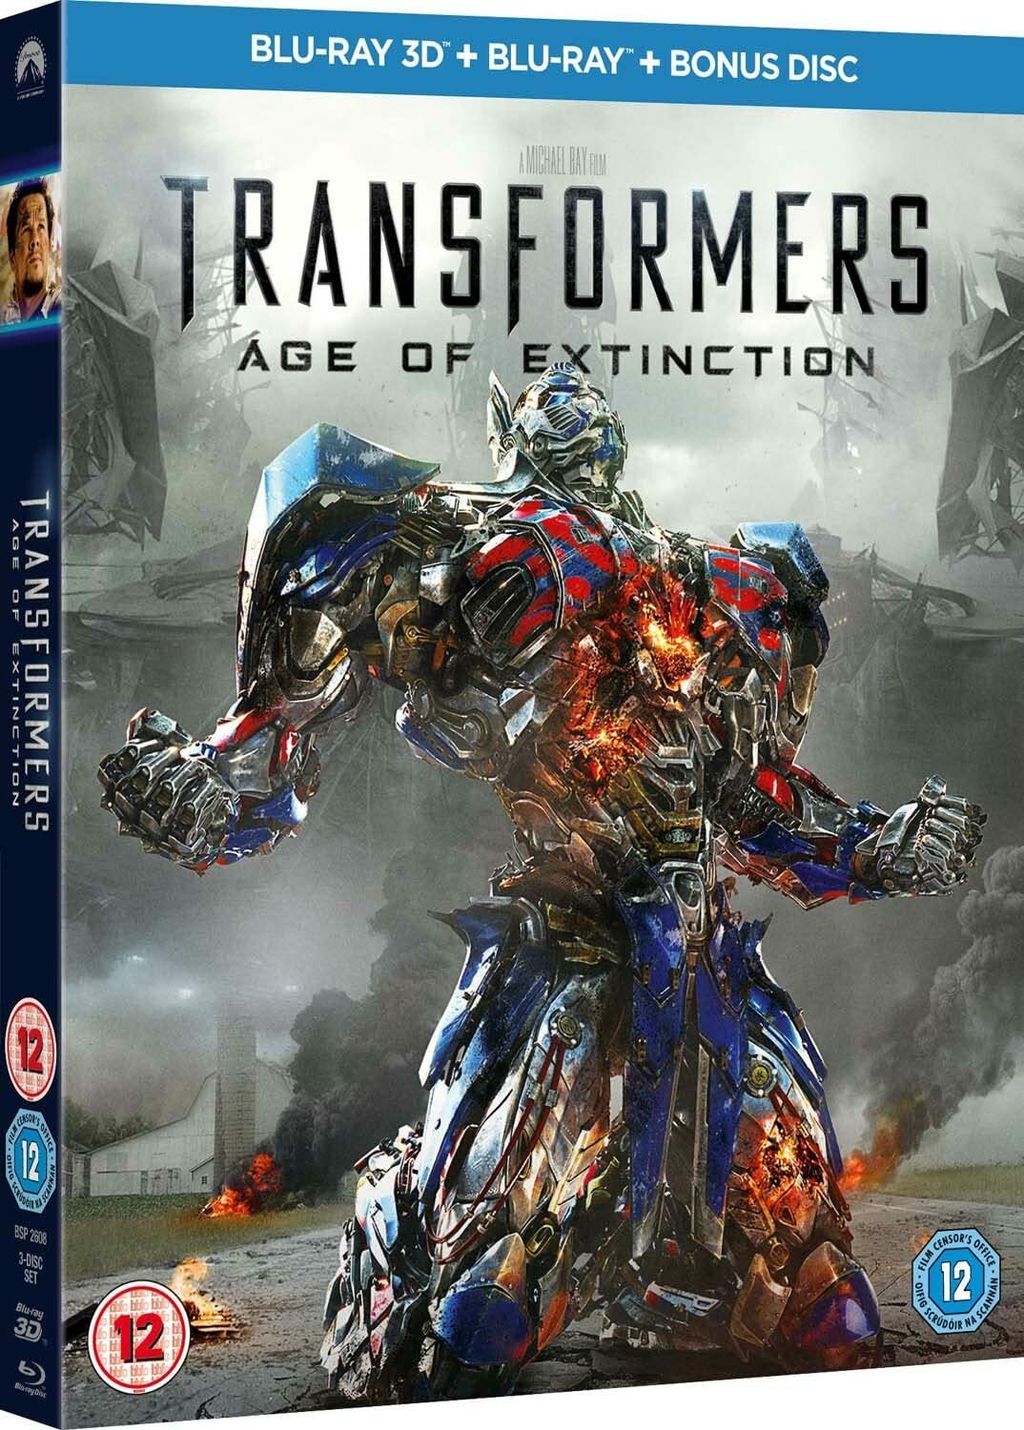 TRANSFORMERS Age of Extinction 3D [Blu-ray] 3-discs.jpg